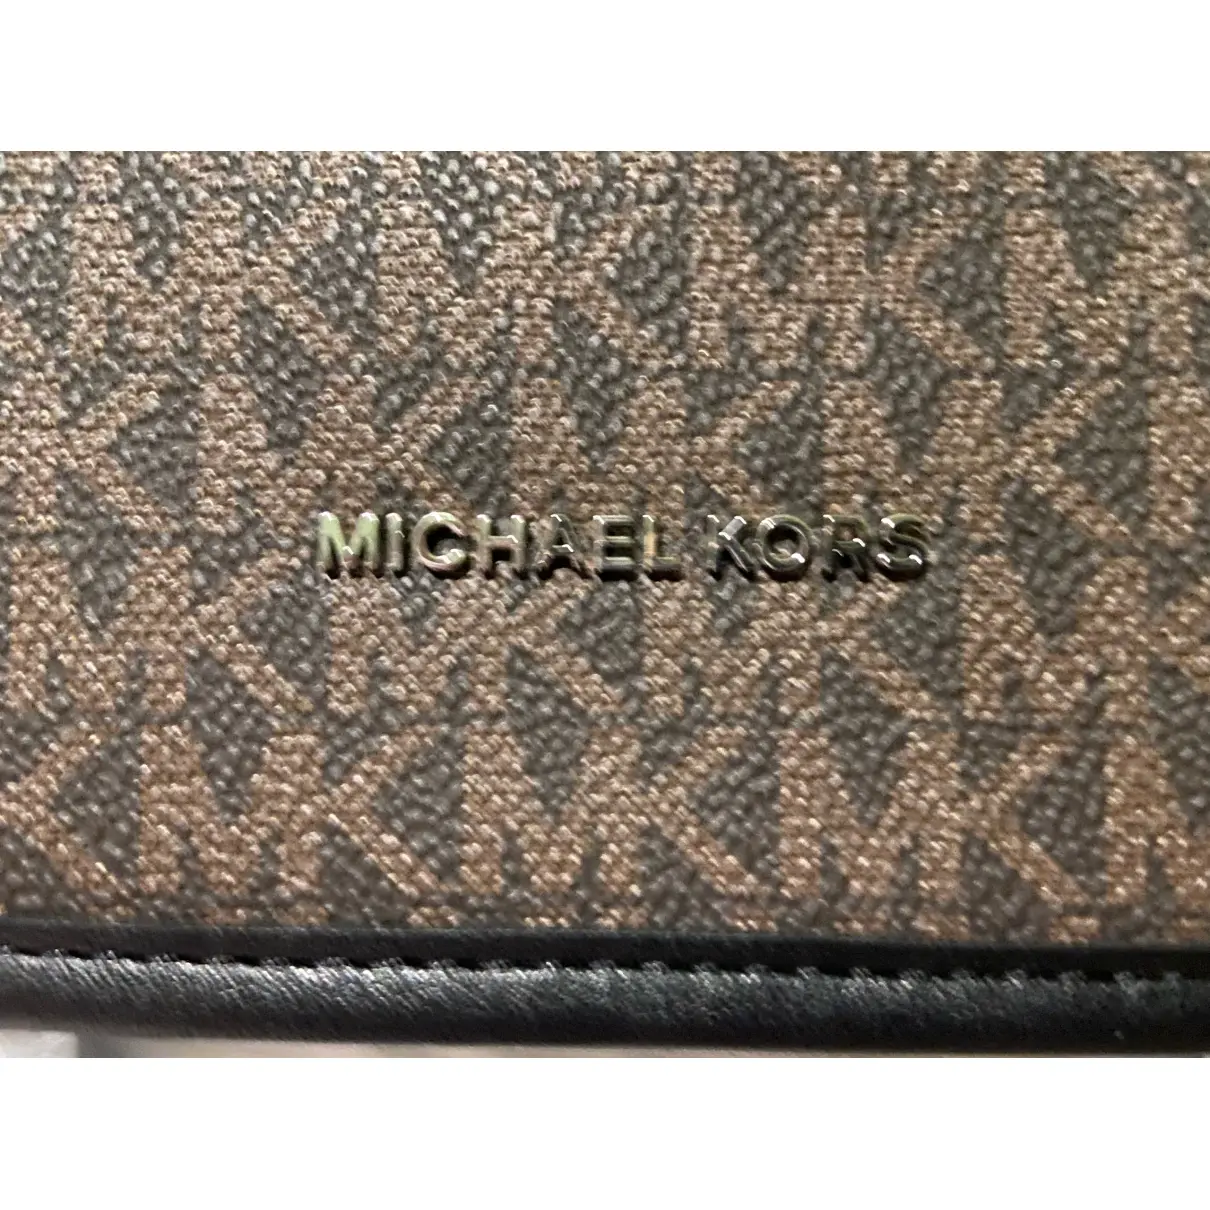 Luxury Michael Kors Bags Men